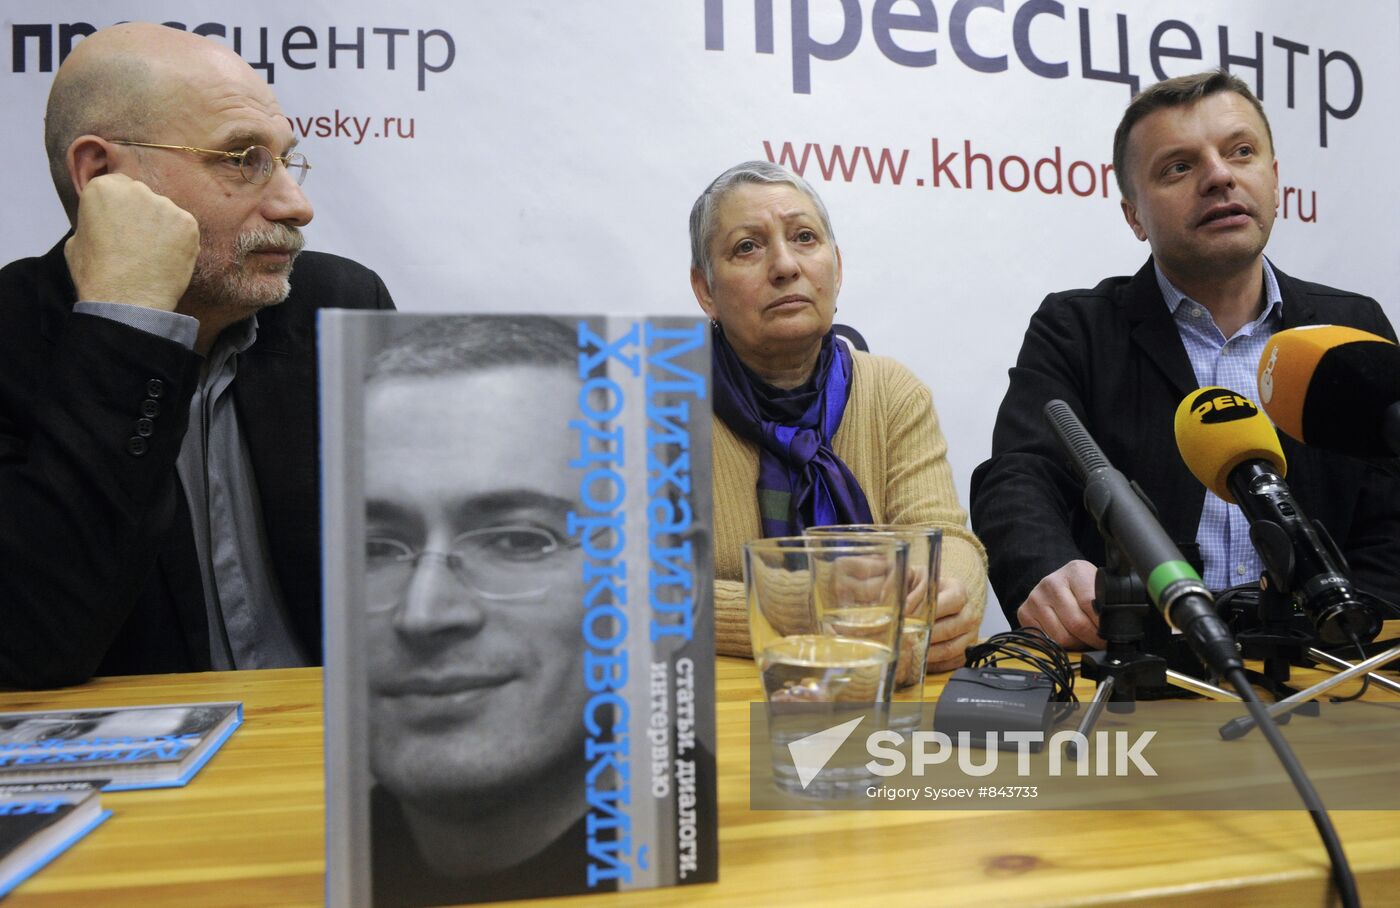 Boris Akunin, Lyudmila Ulitskaya and Leonid Parfyonov